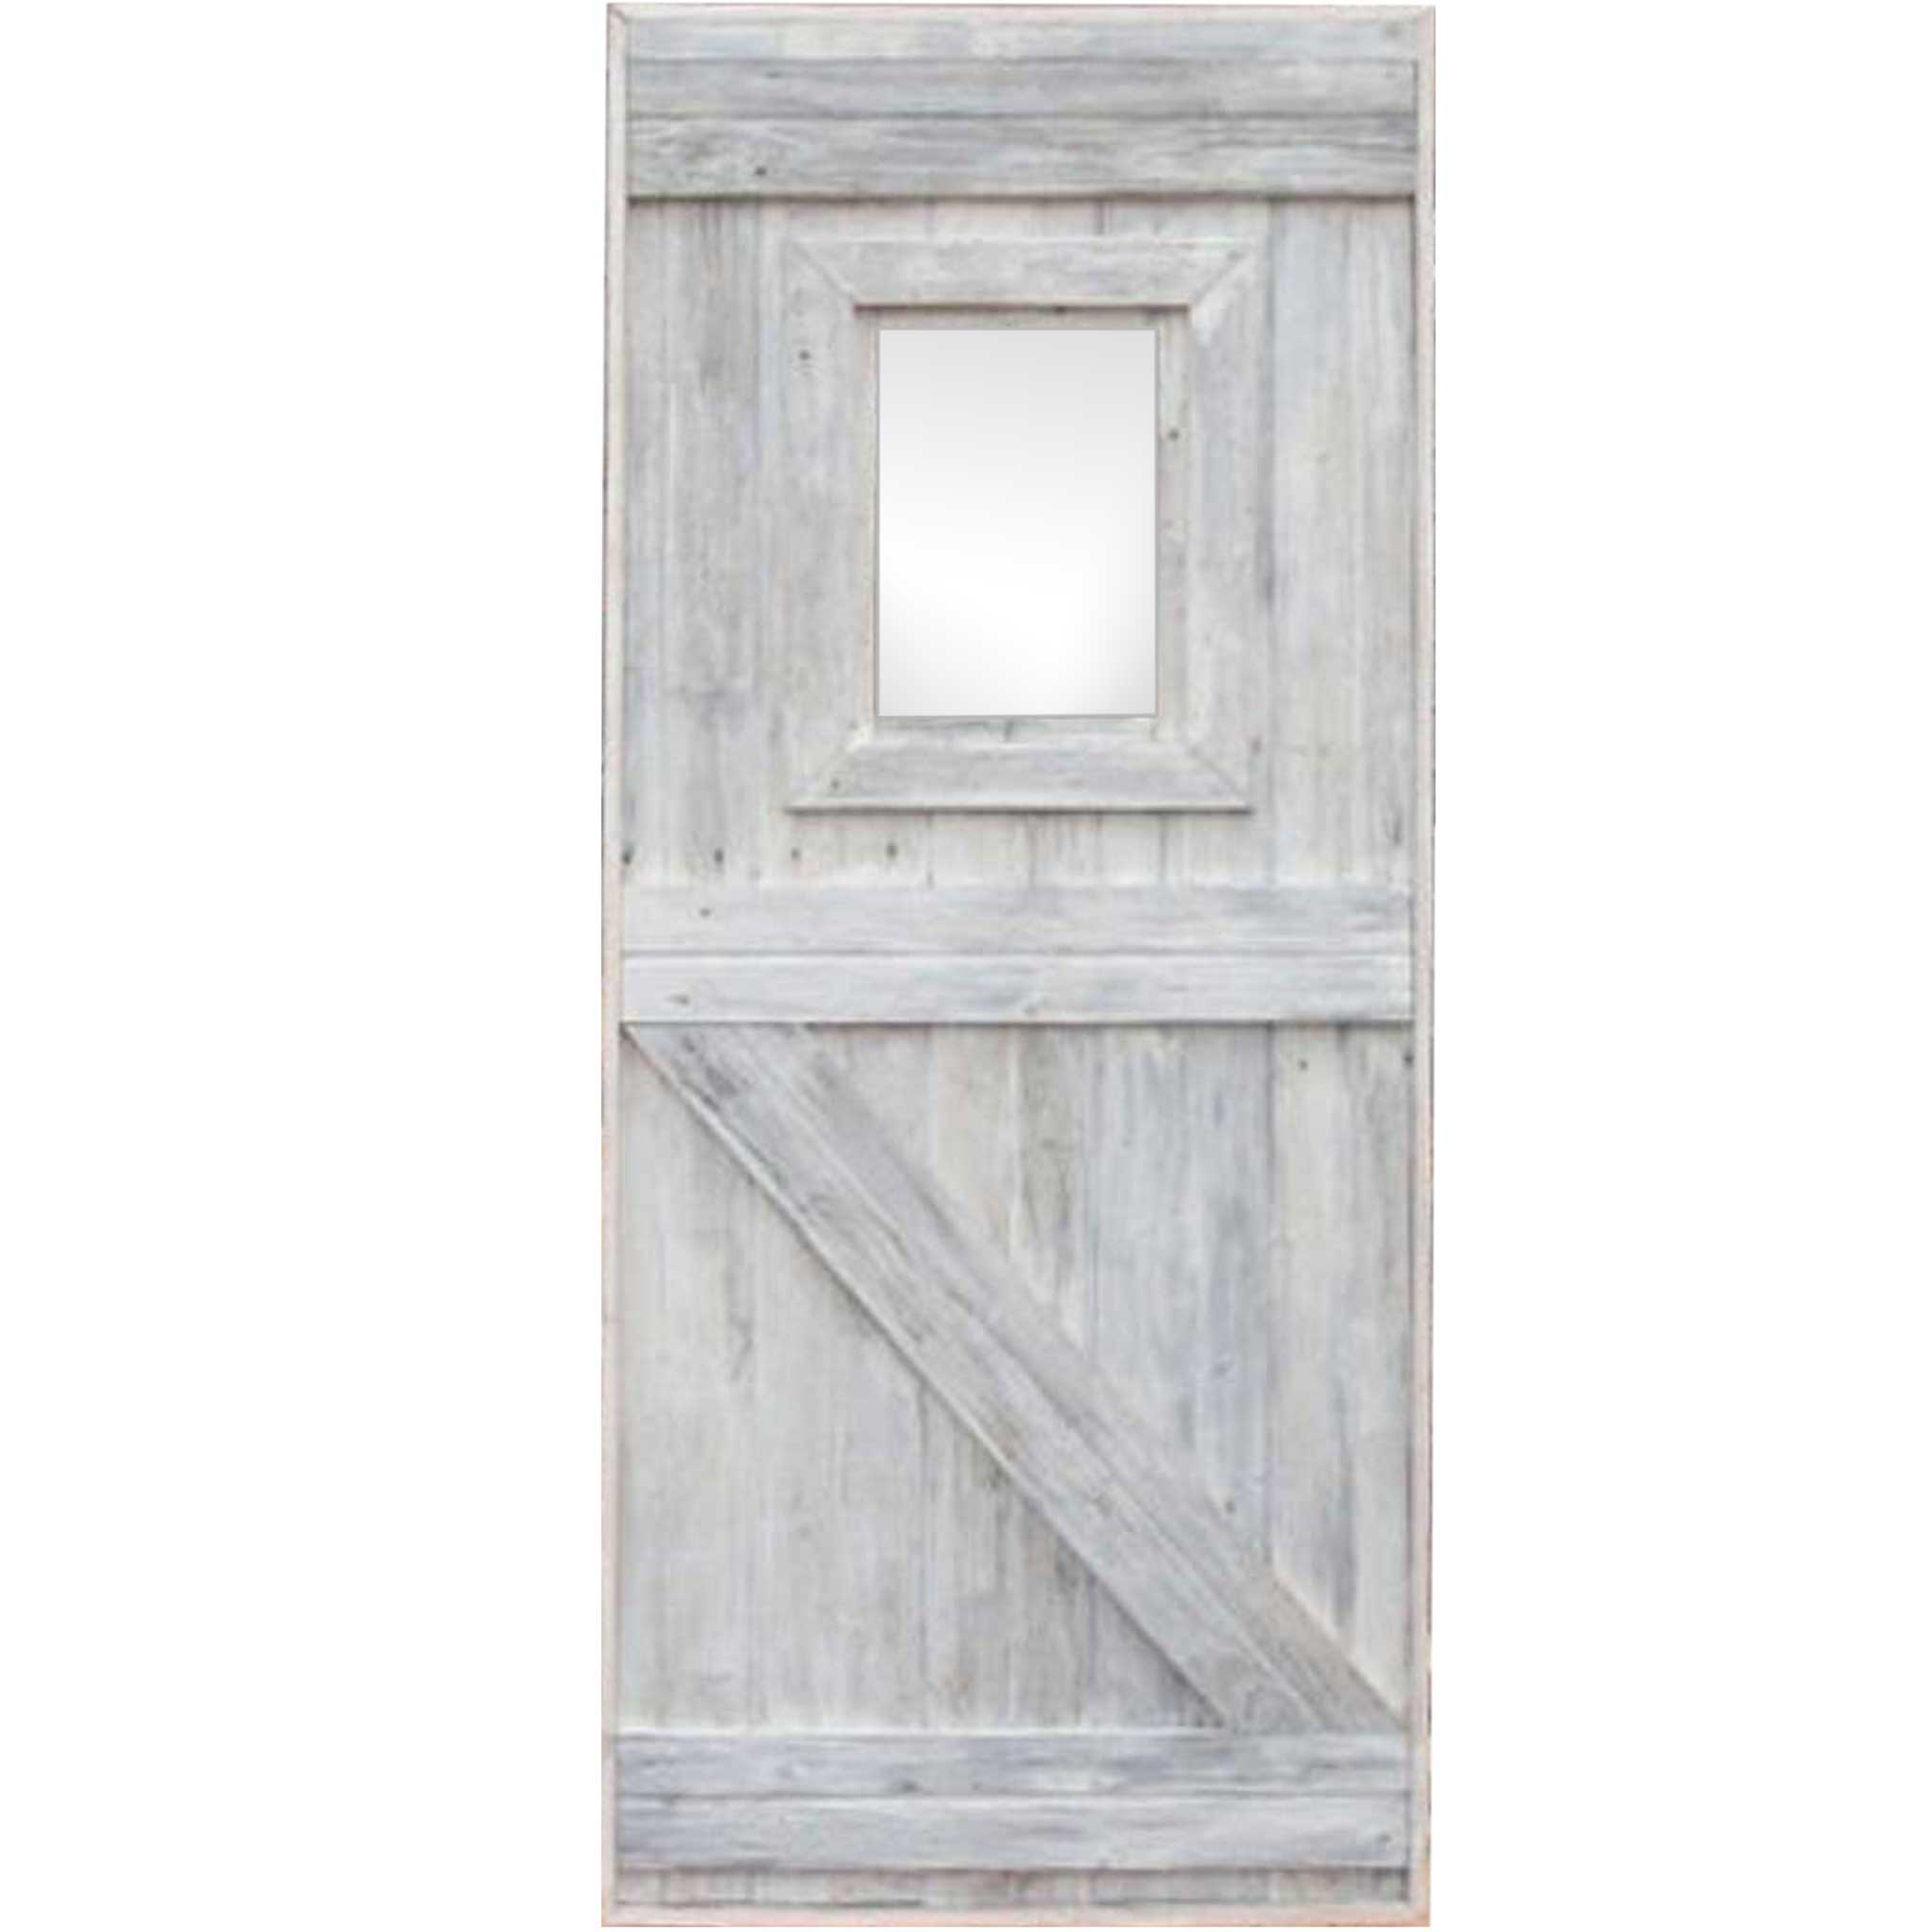 Mission Barn Doors Made of Hickory - Whatman Hardwoods